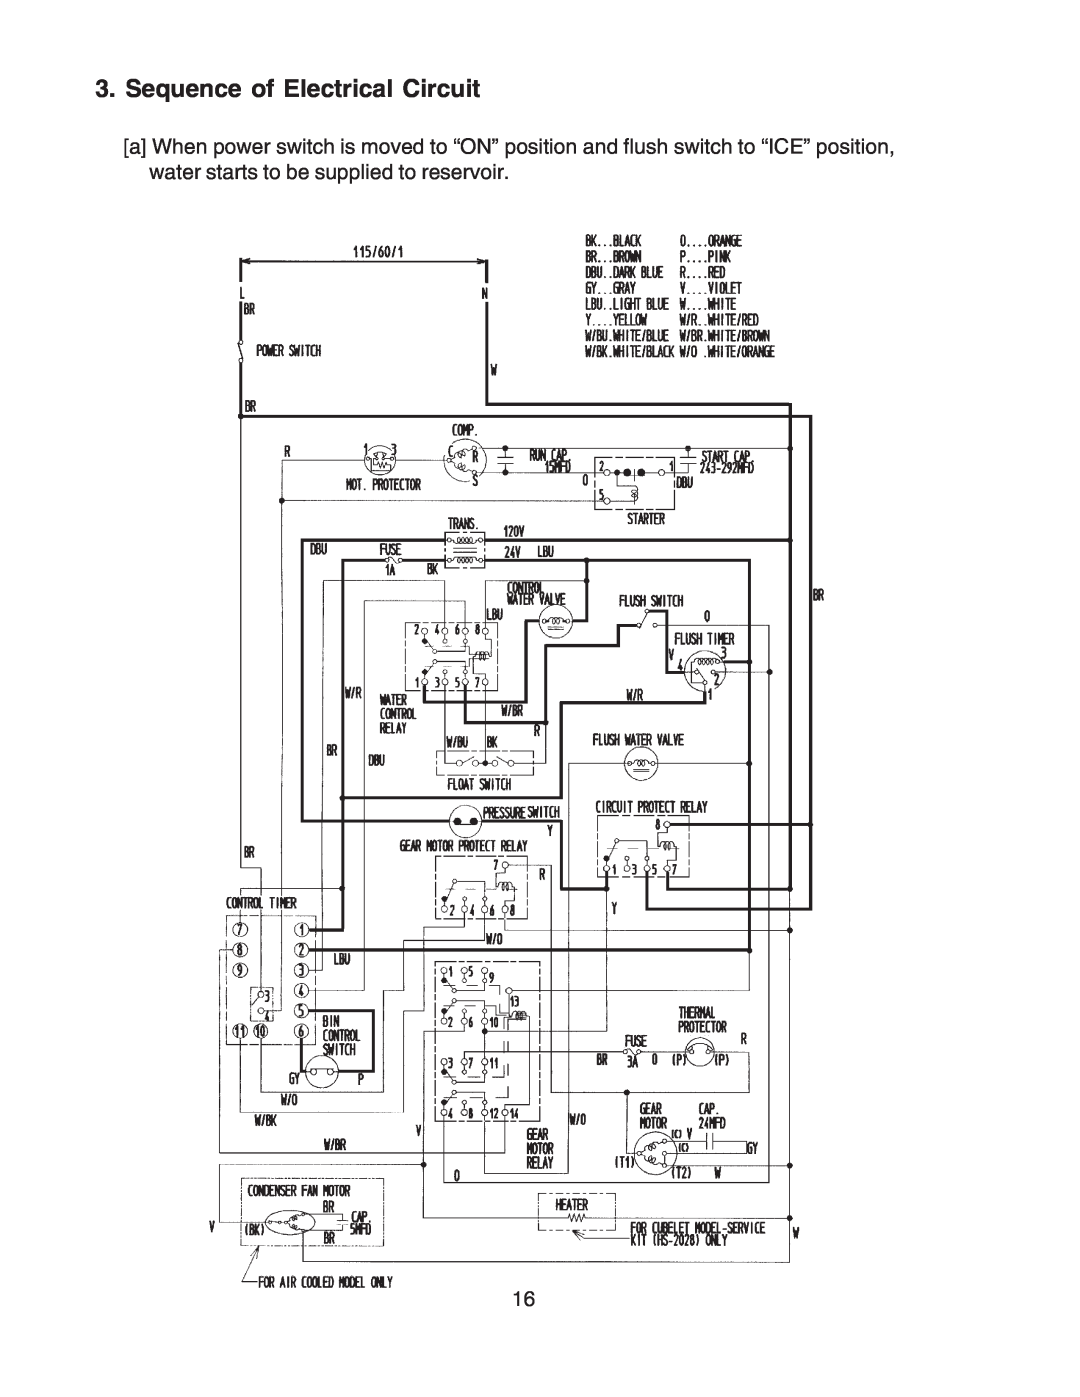 Hoshizaki F-80 I MWH (-c), F-80 I MAH (-c) service manual Sequence of Electrical Circuit 